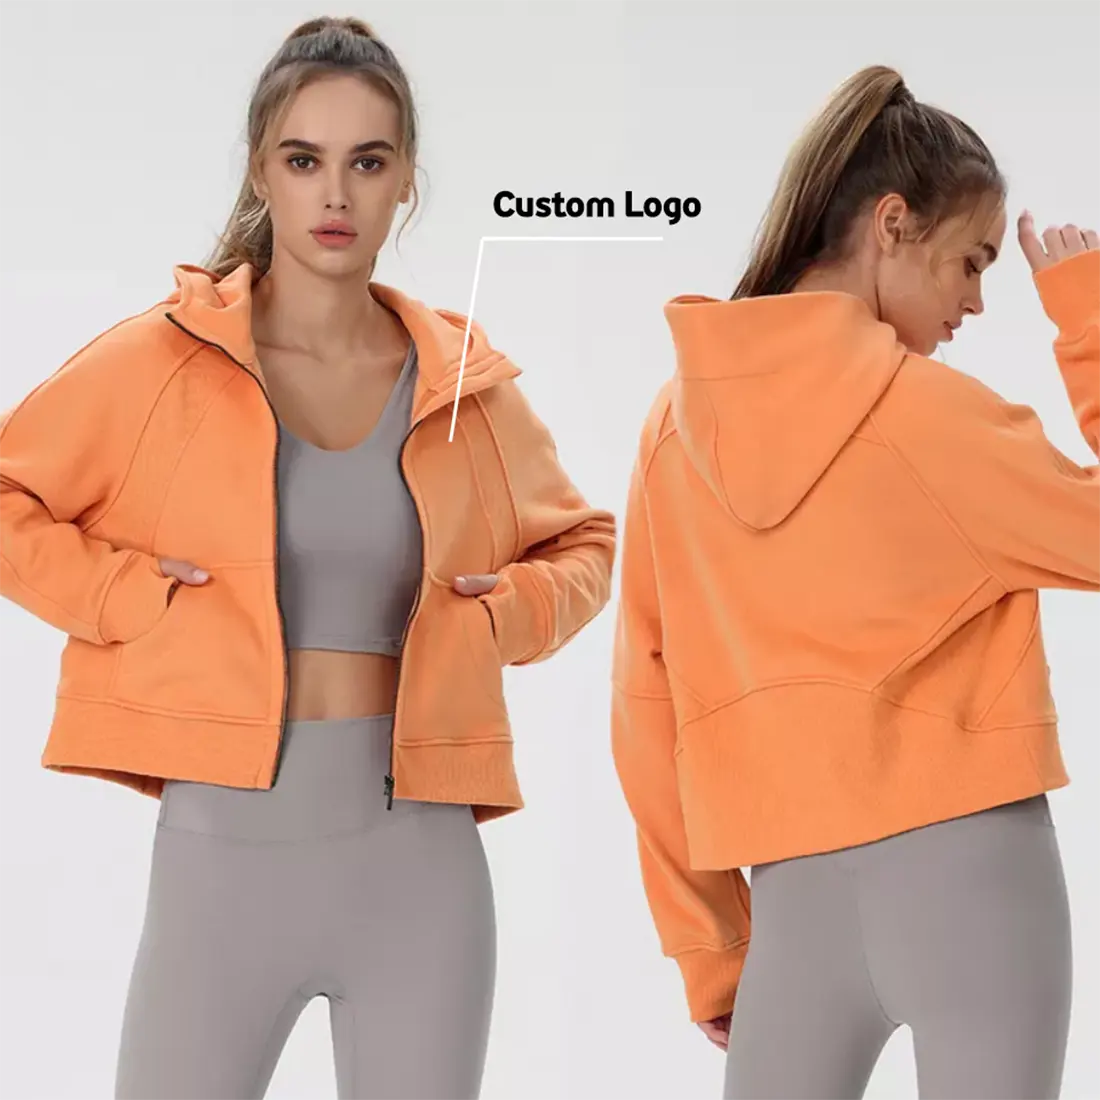 2022 Women Workout Plus Size Hoodies Winter Hoodies Pockets Crop Sport Jacket Female Fitness Yoga Shirt Top